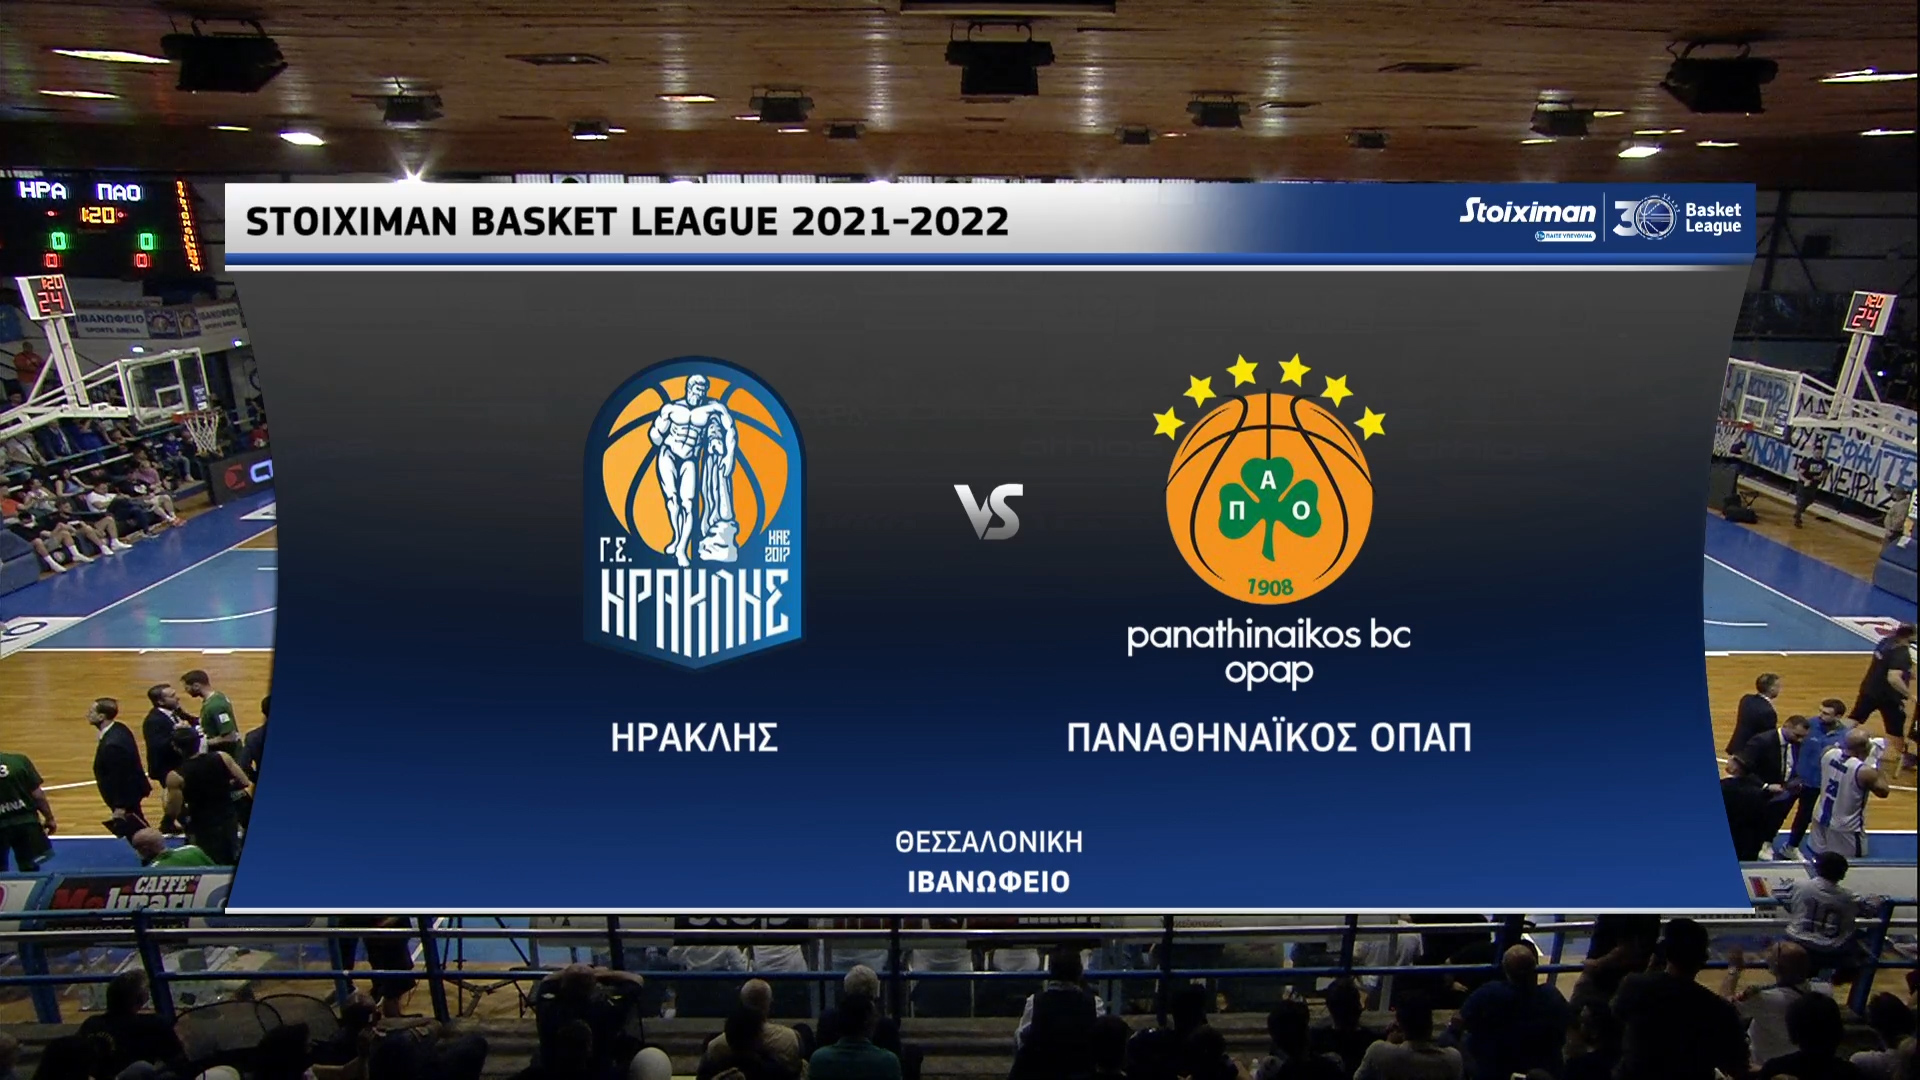 Basket League 2021 2022 | Σάββατο 14 Μαΐου 2022 – Ηρακλής – Παναθηναϊκός